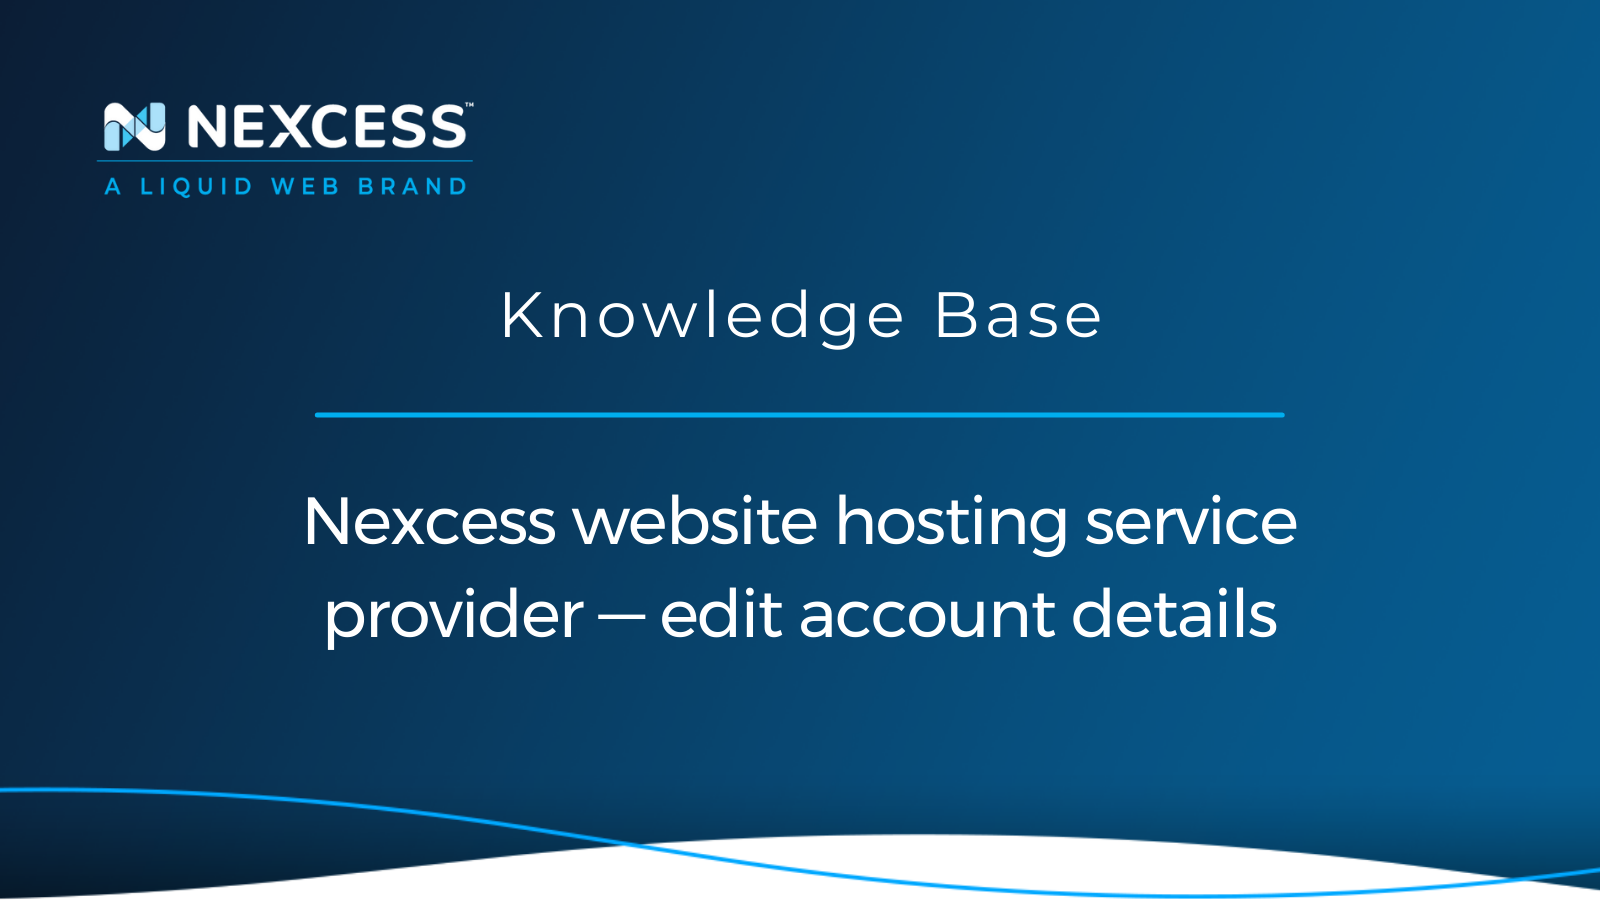 Nexcess website hosting service provider — edit account details